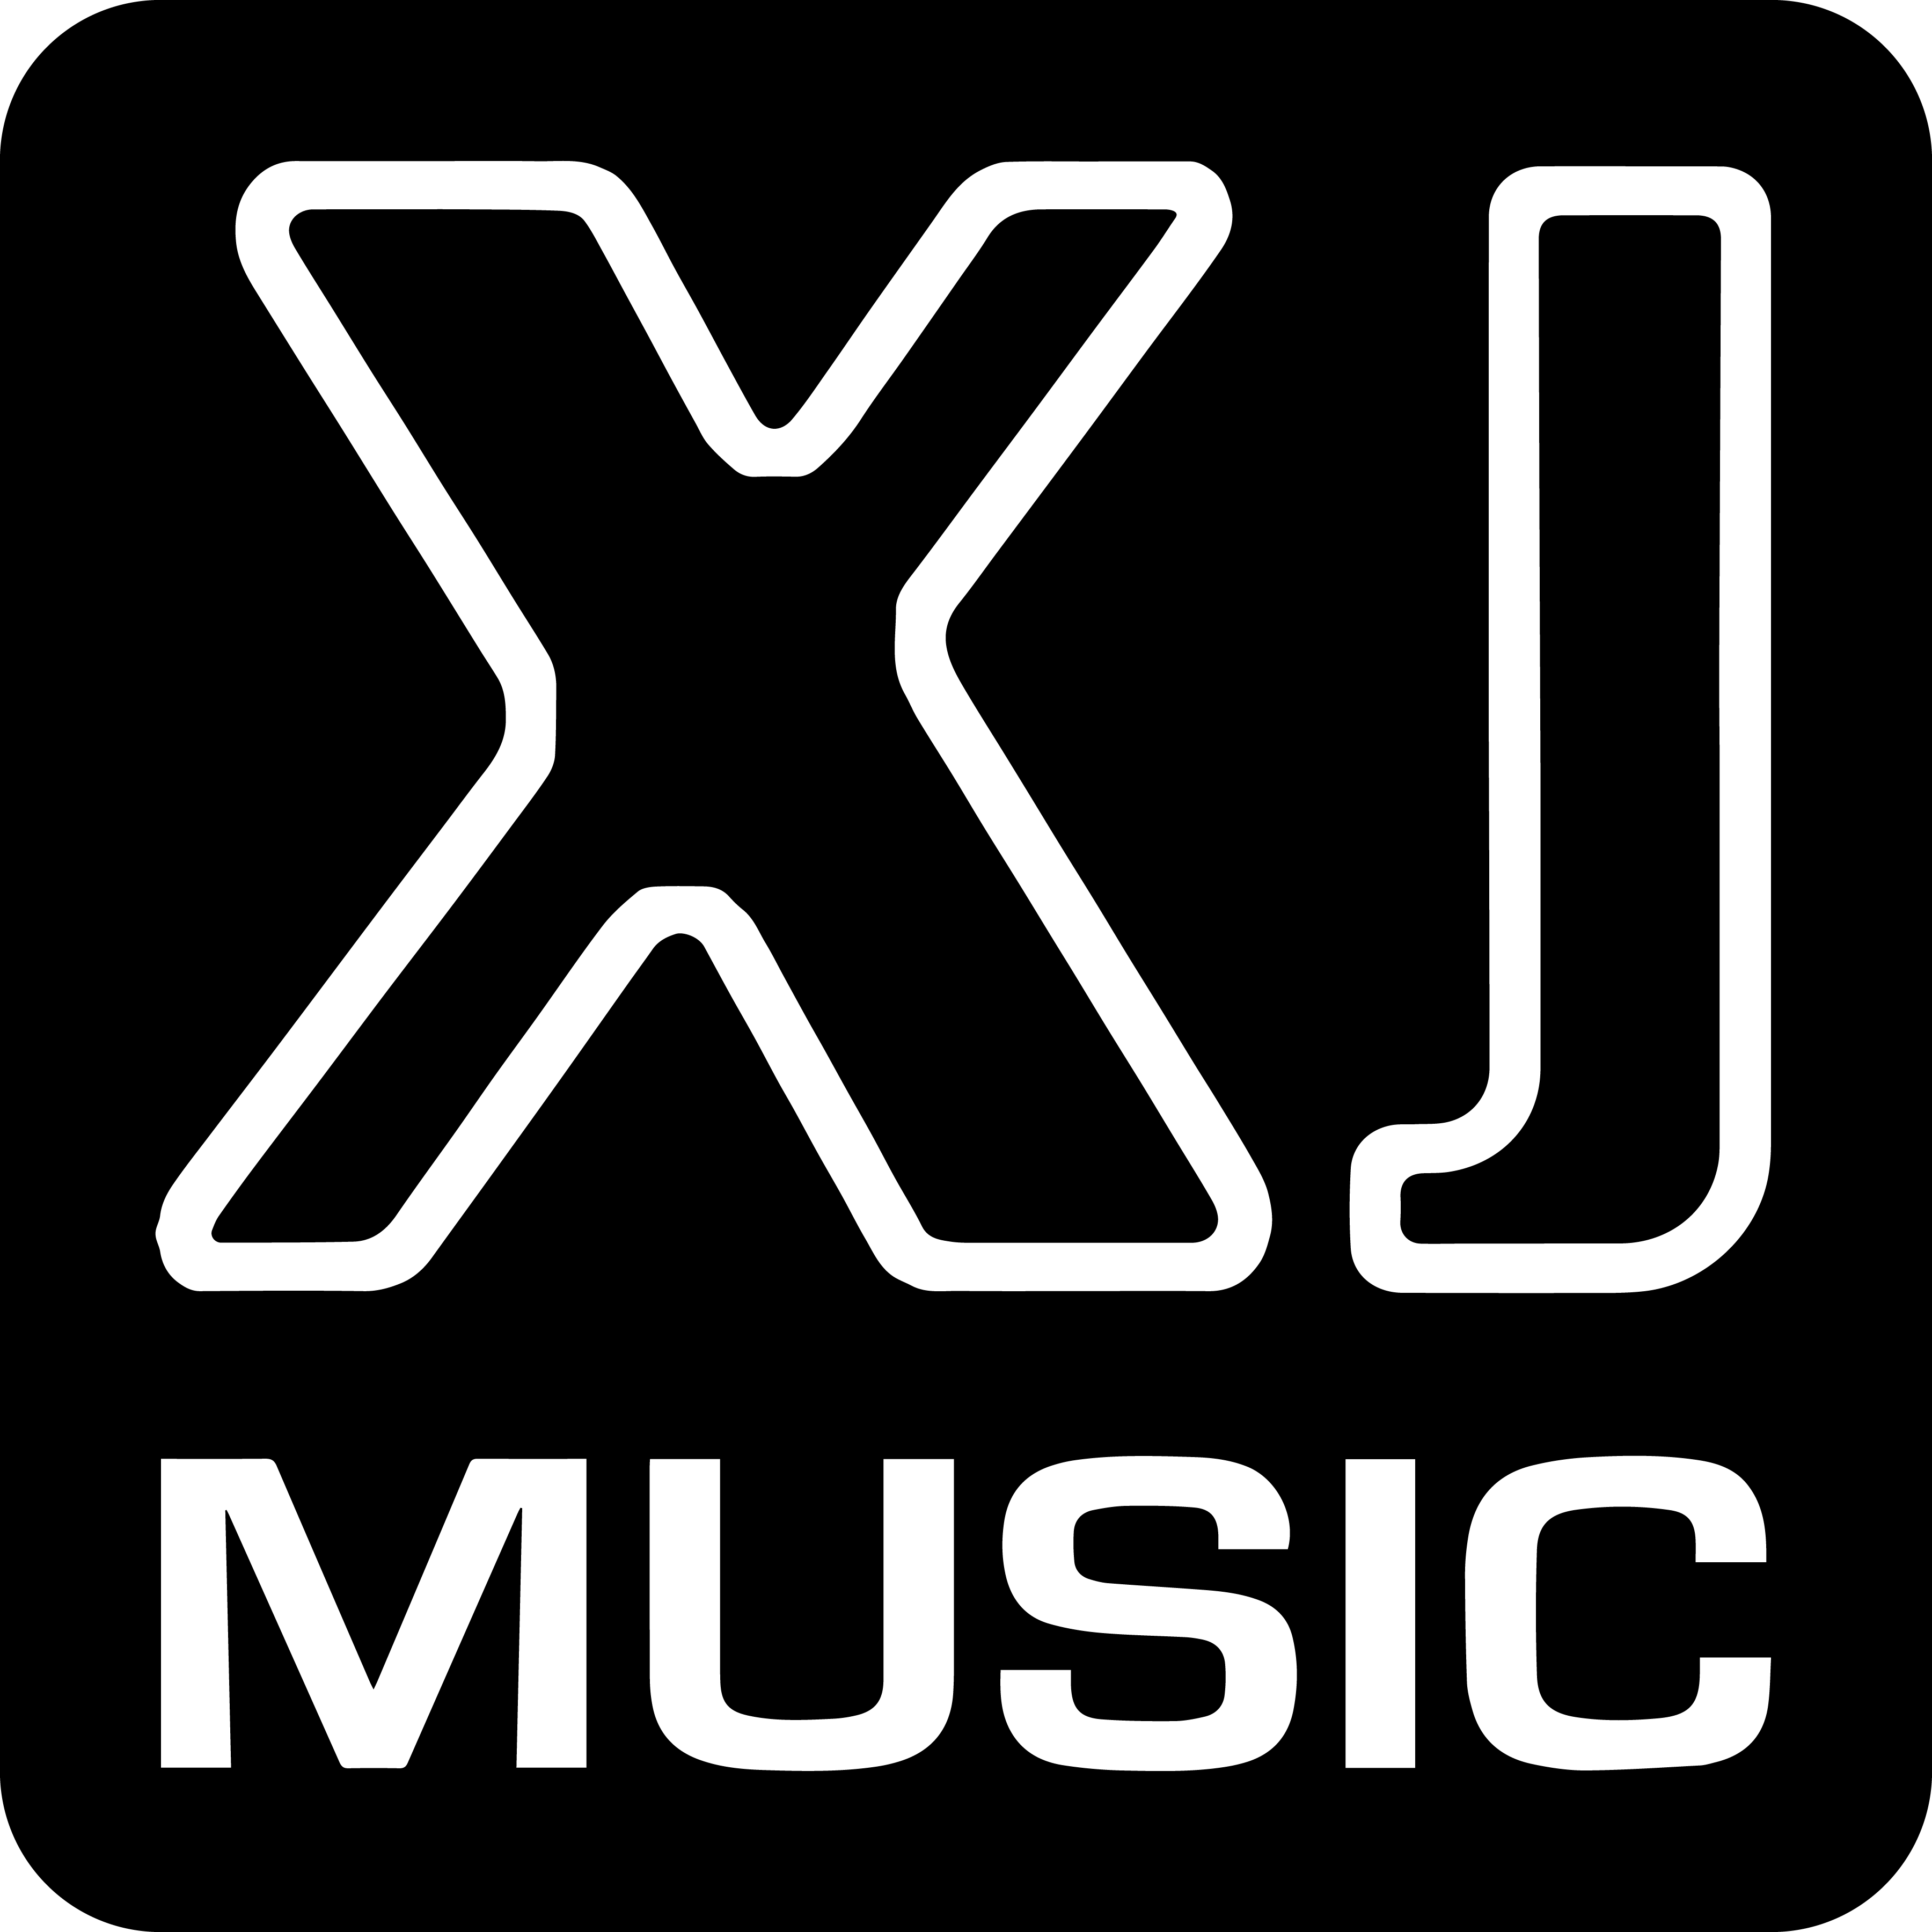 XJ music logo